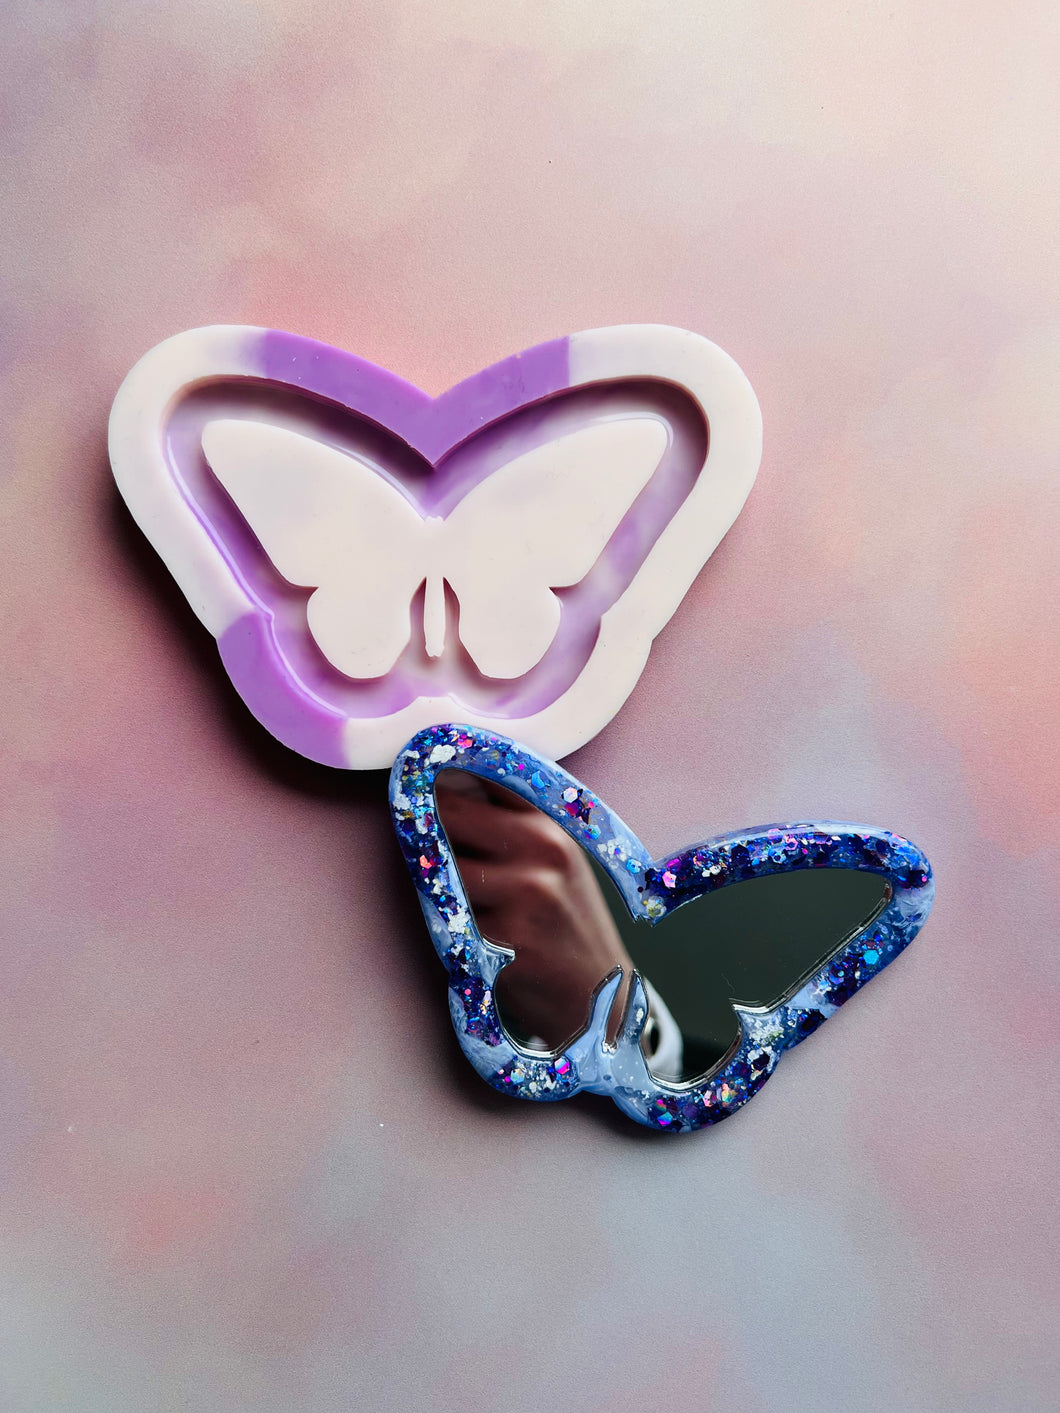 Butterfly mini mirror mould